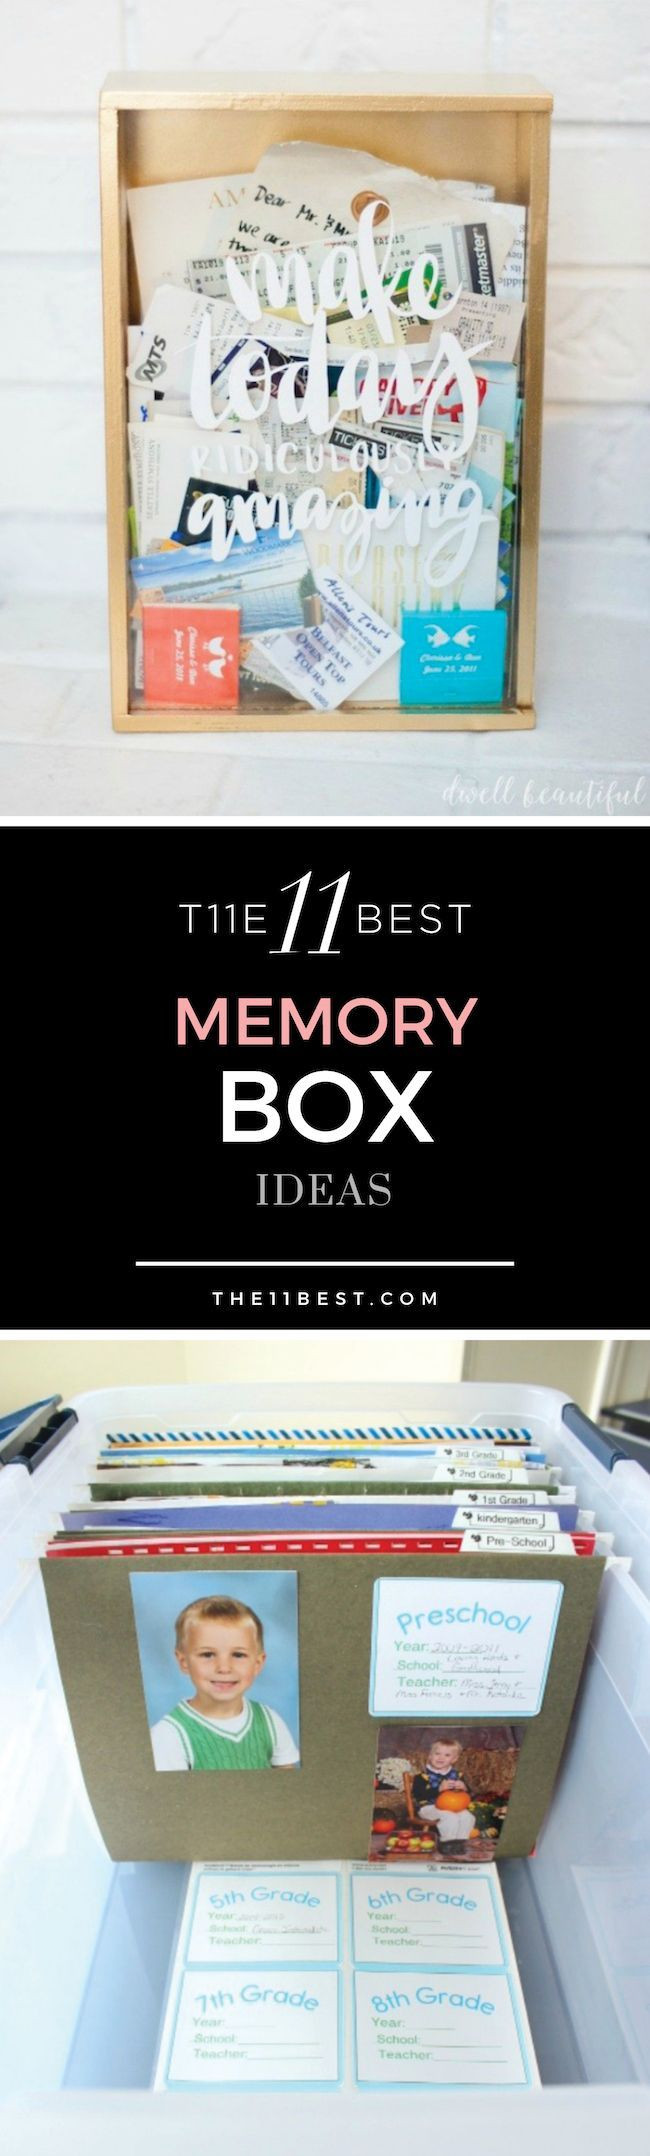 DIY Memory Boxes
 The 11 Best DIY Memory Box Ideas